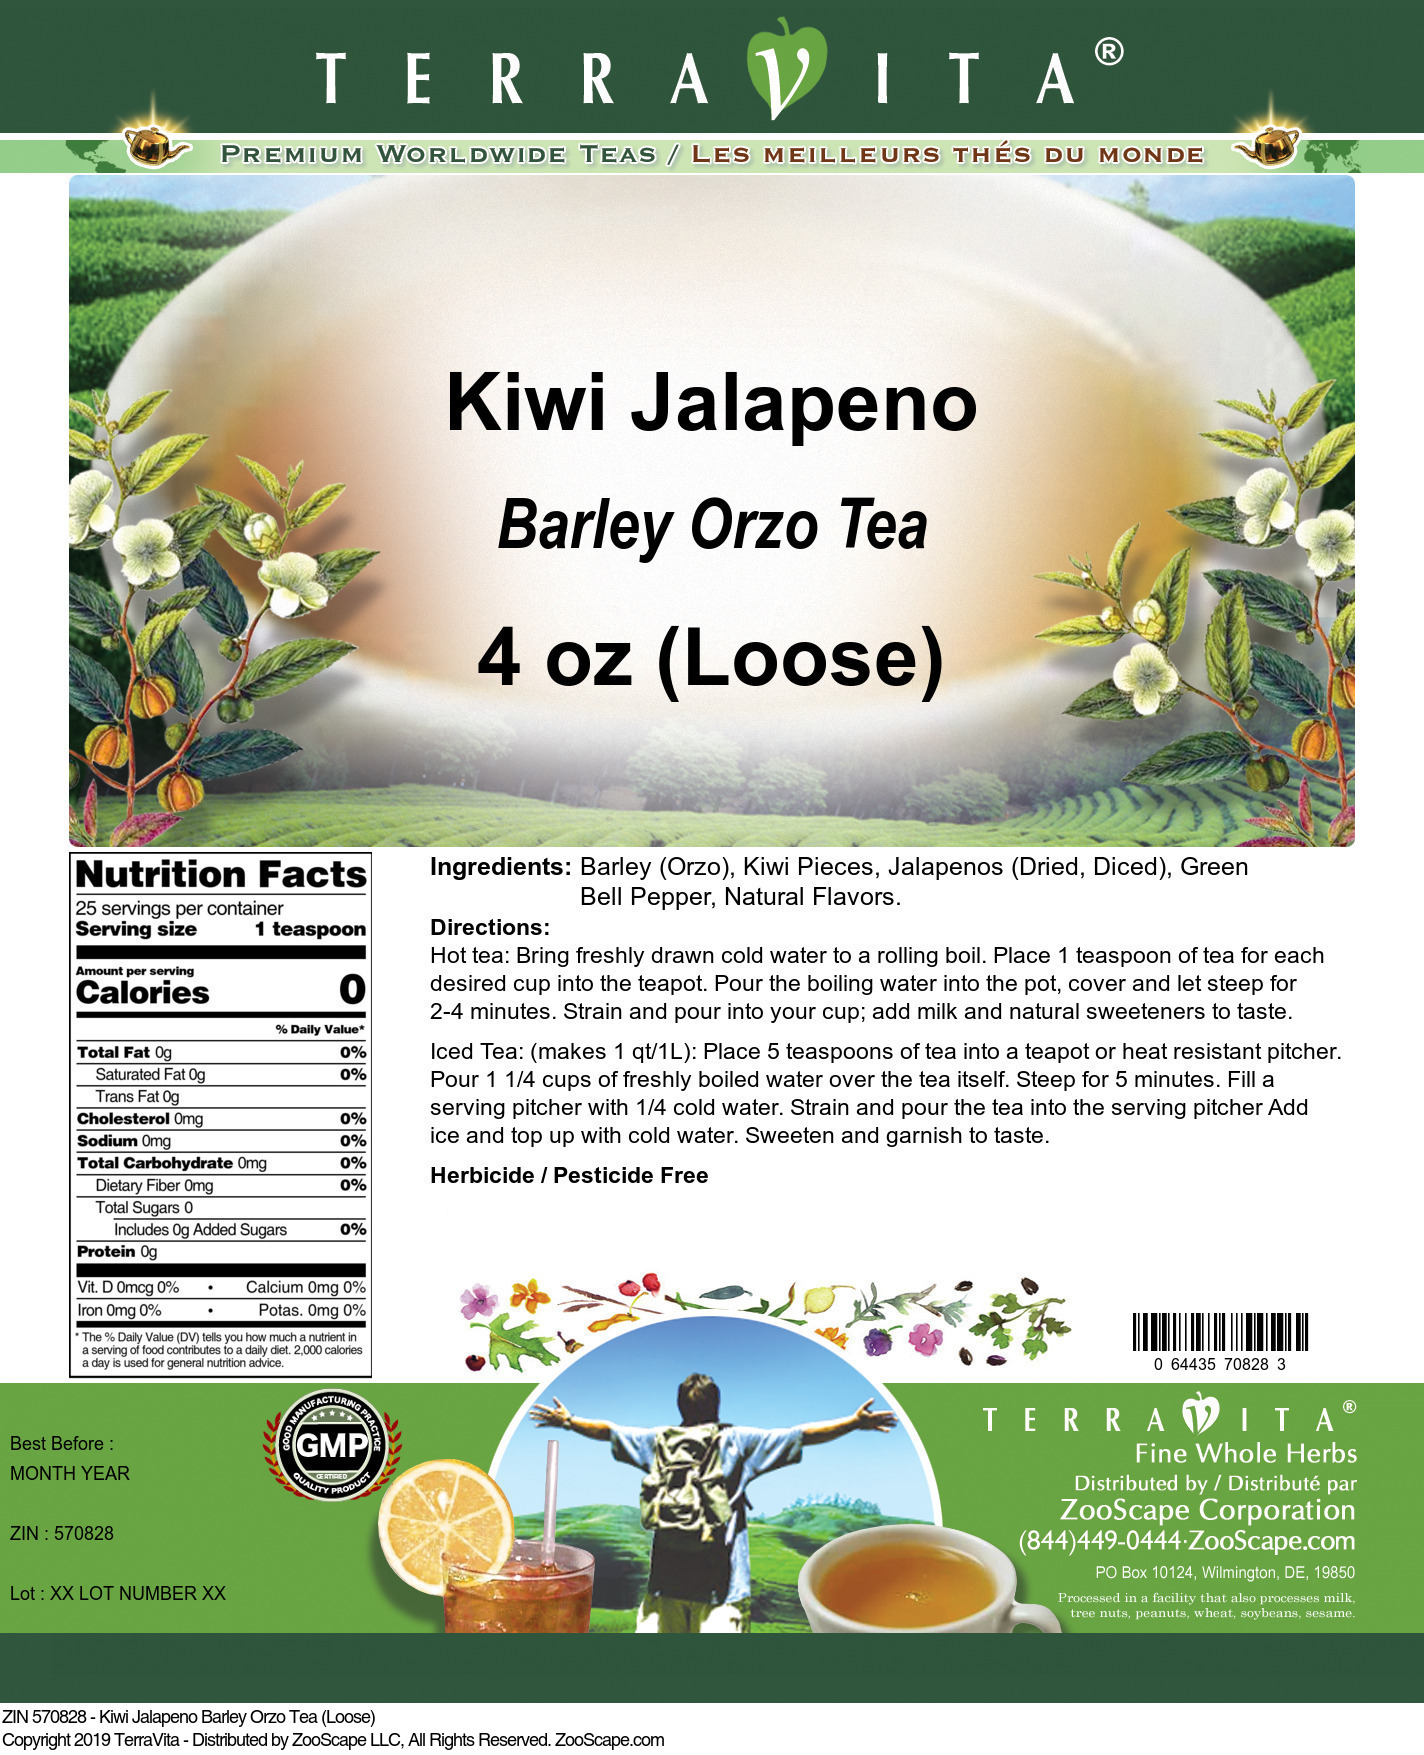 Kiwi Jalapeno Barley Orzo Tea (Loose) - Label